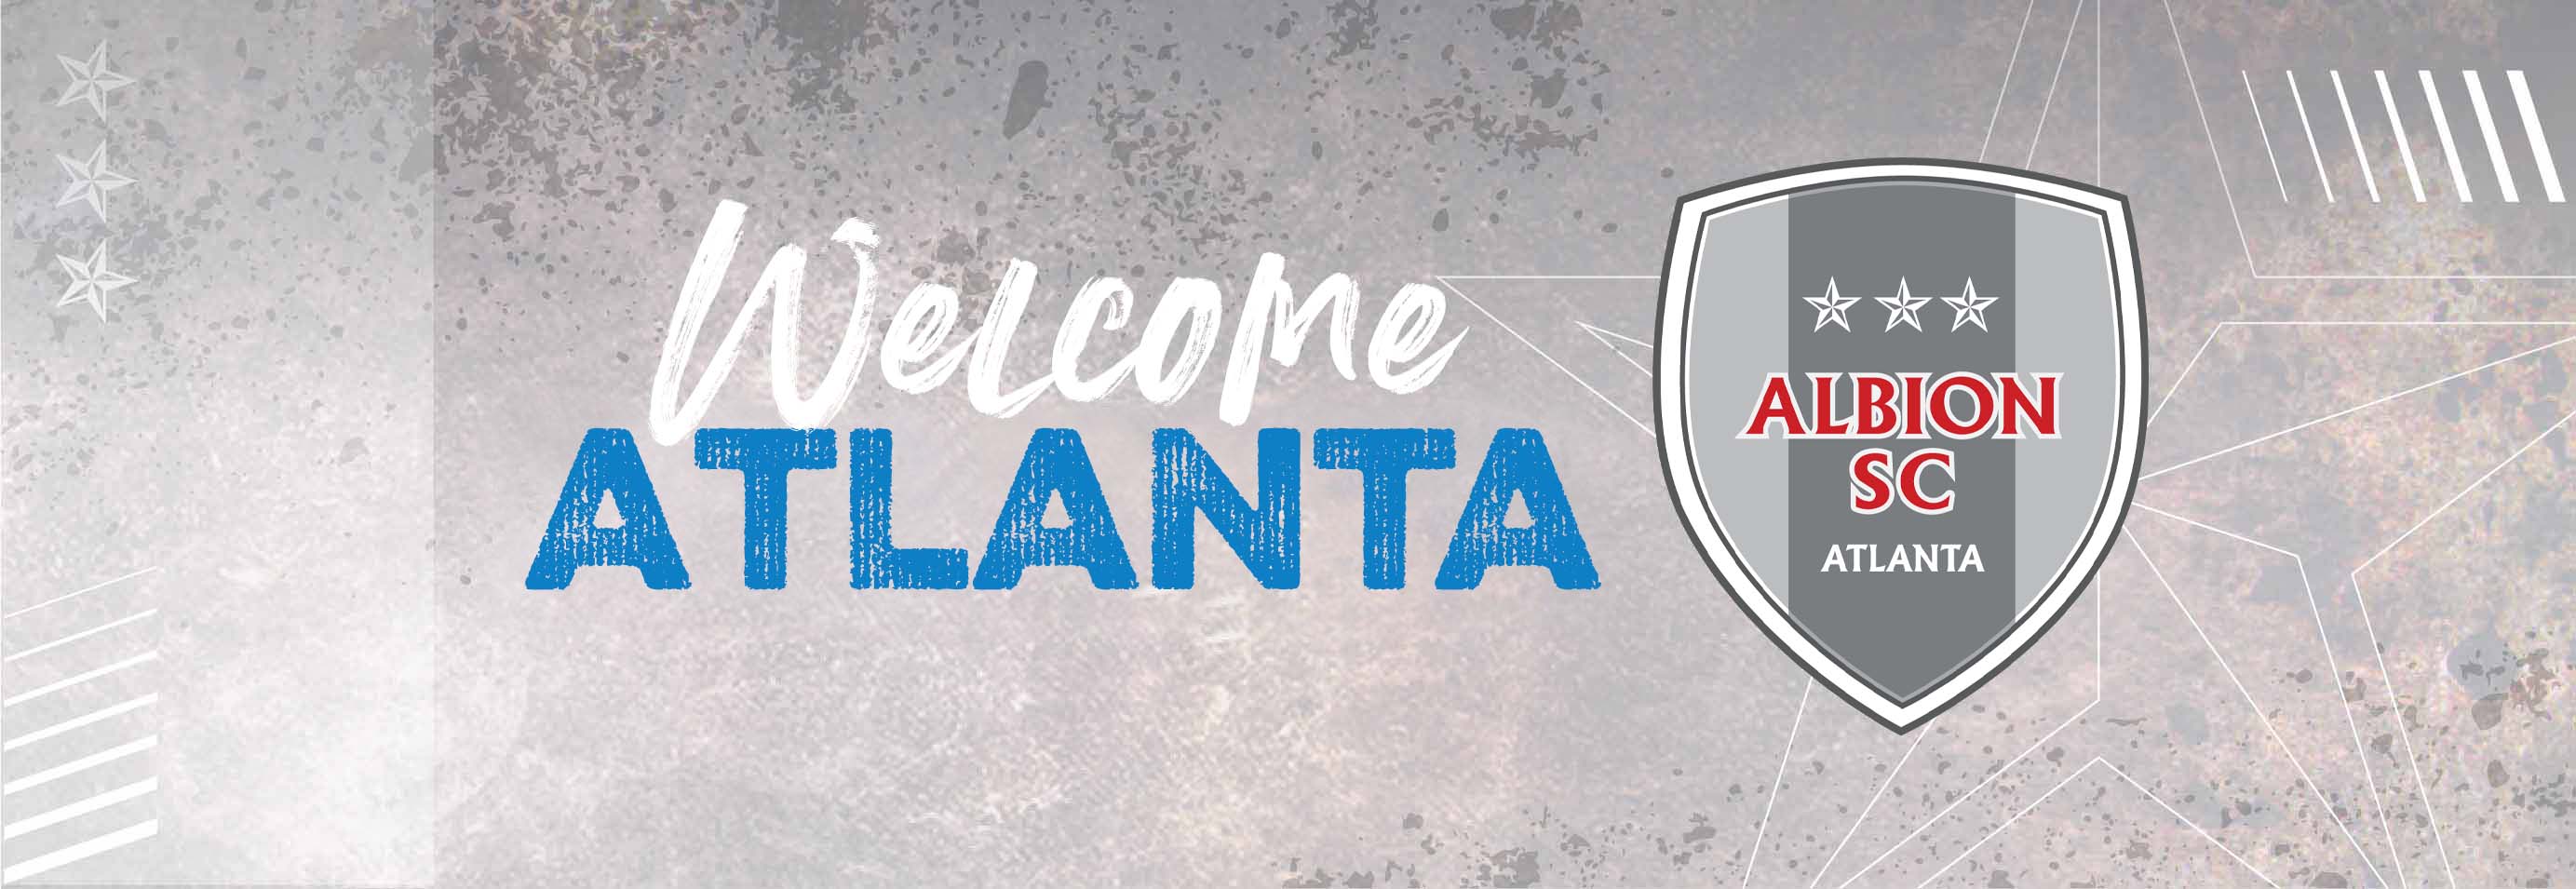 Welcome ALBION SC Atlanta